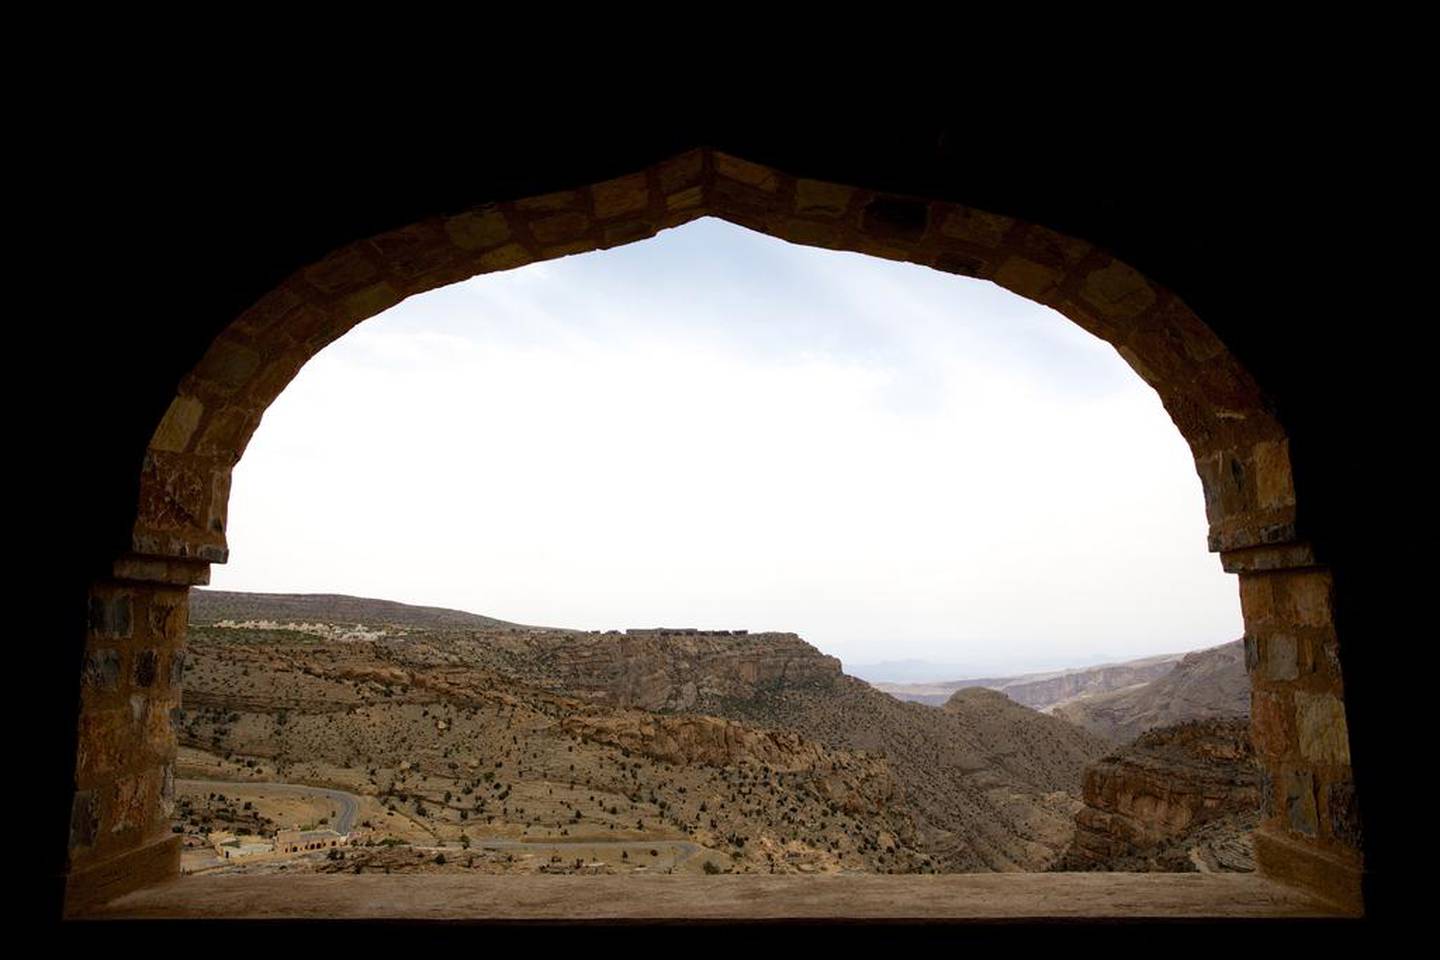 Alila Jabal Akhdar overlooks the Jebel Akhdar range in Oman. Courtesy Alila Hotels and Resorts